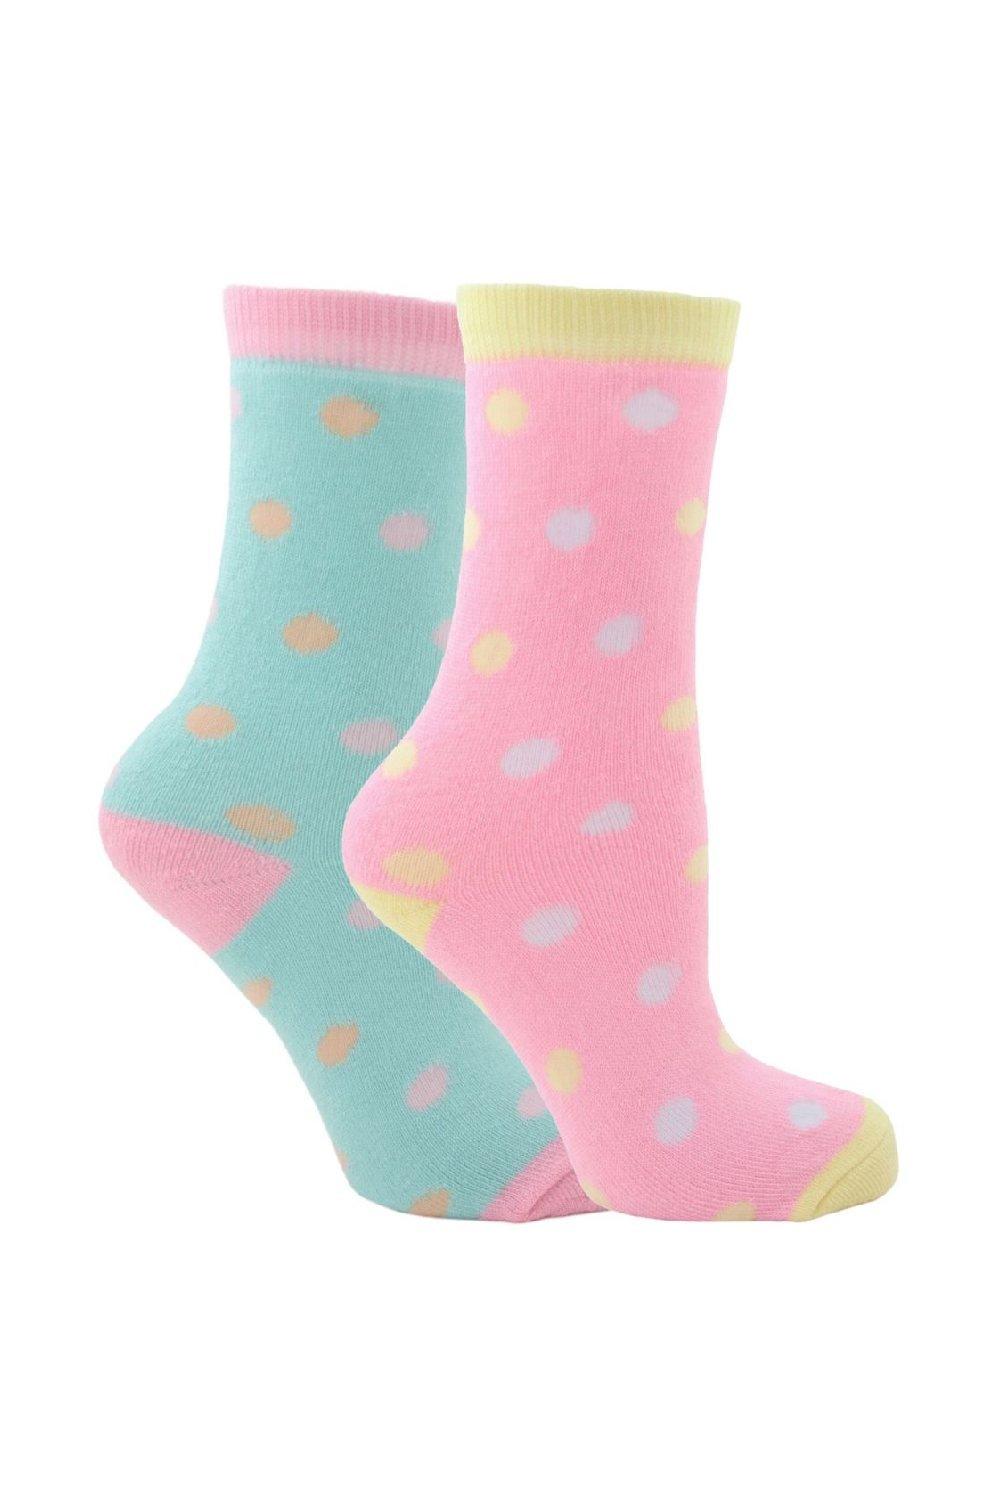 2 Pairs Thick Thermal Polka Dot Design Colourful Casual Socks